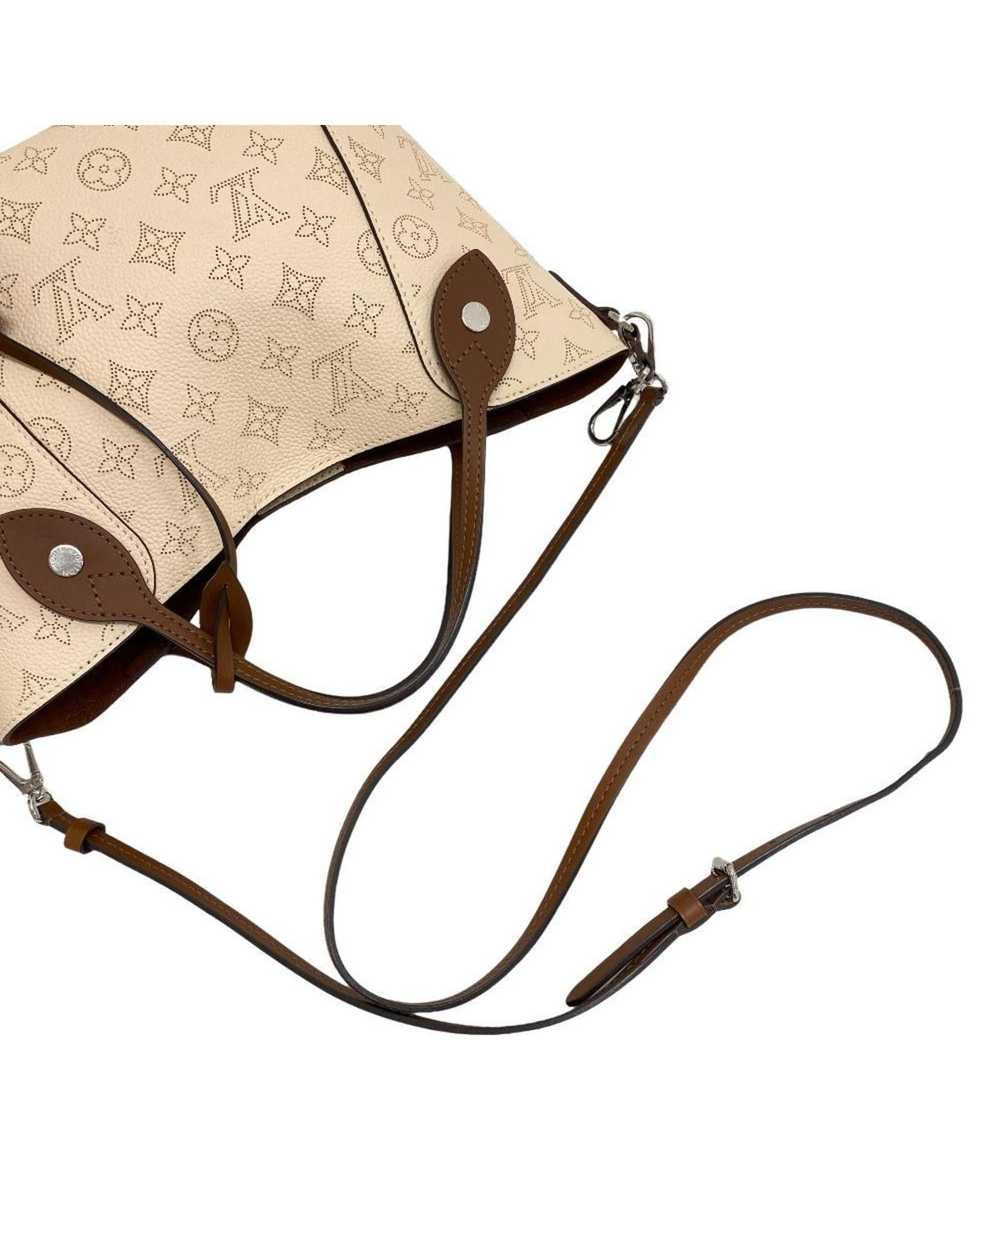 Louis Vuitton Elegant Beige Leather 2-Way Bag wit… - image 7